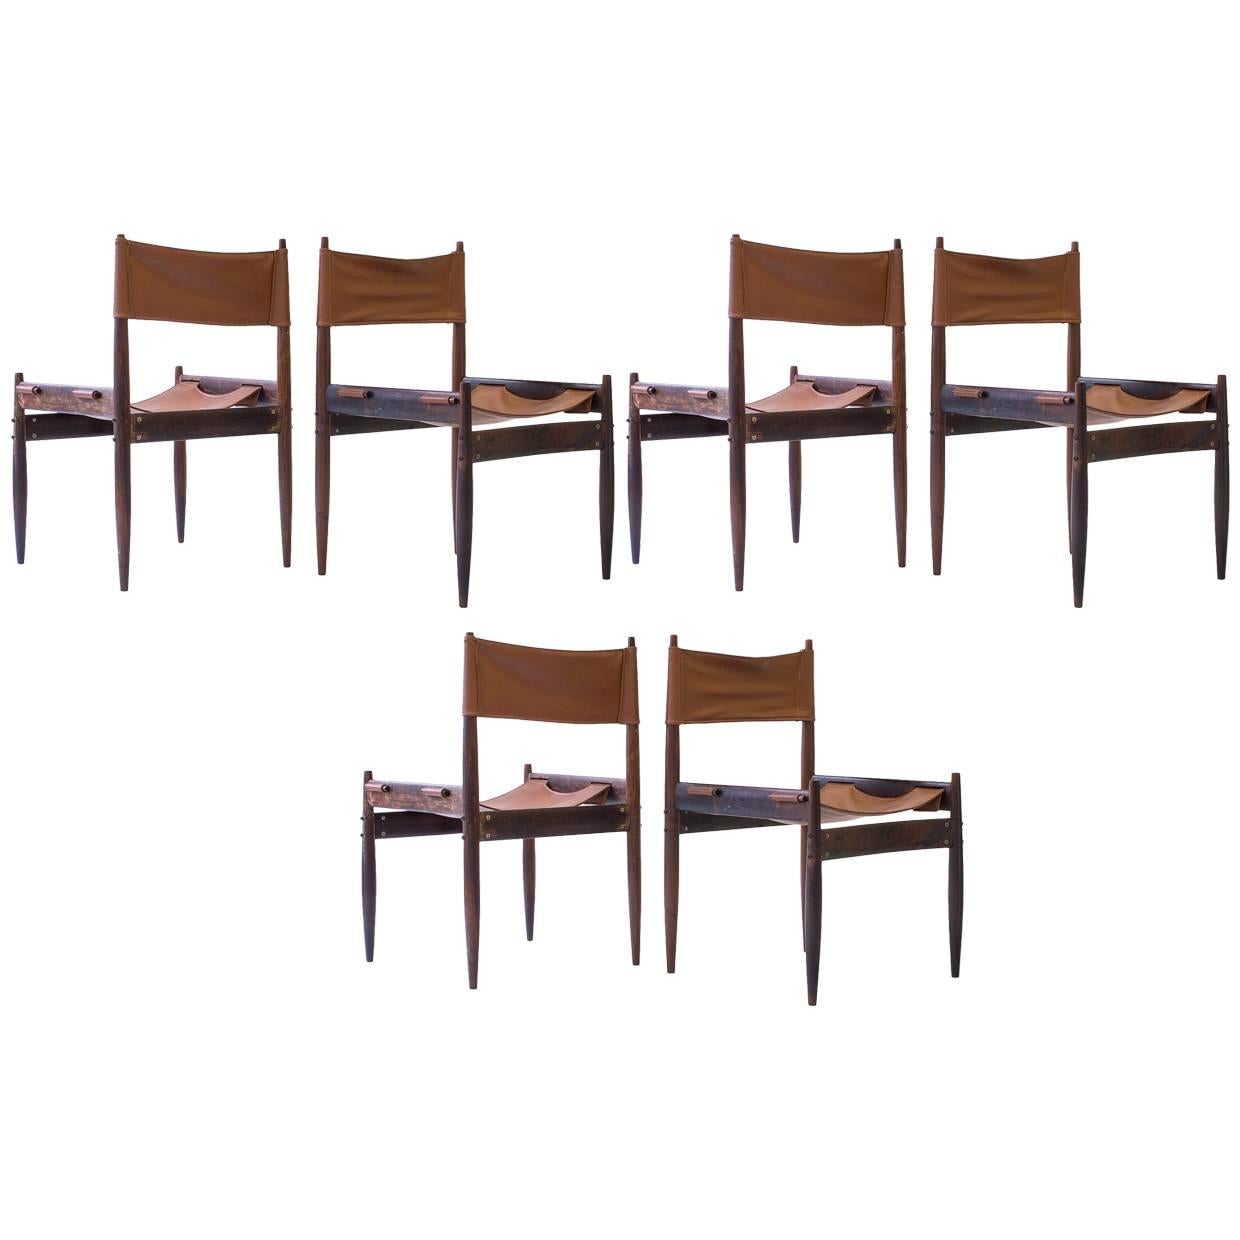 1960s Set of Six "Jockey" Chairs in Rosewood by Jorge Zalszupin, Brazil